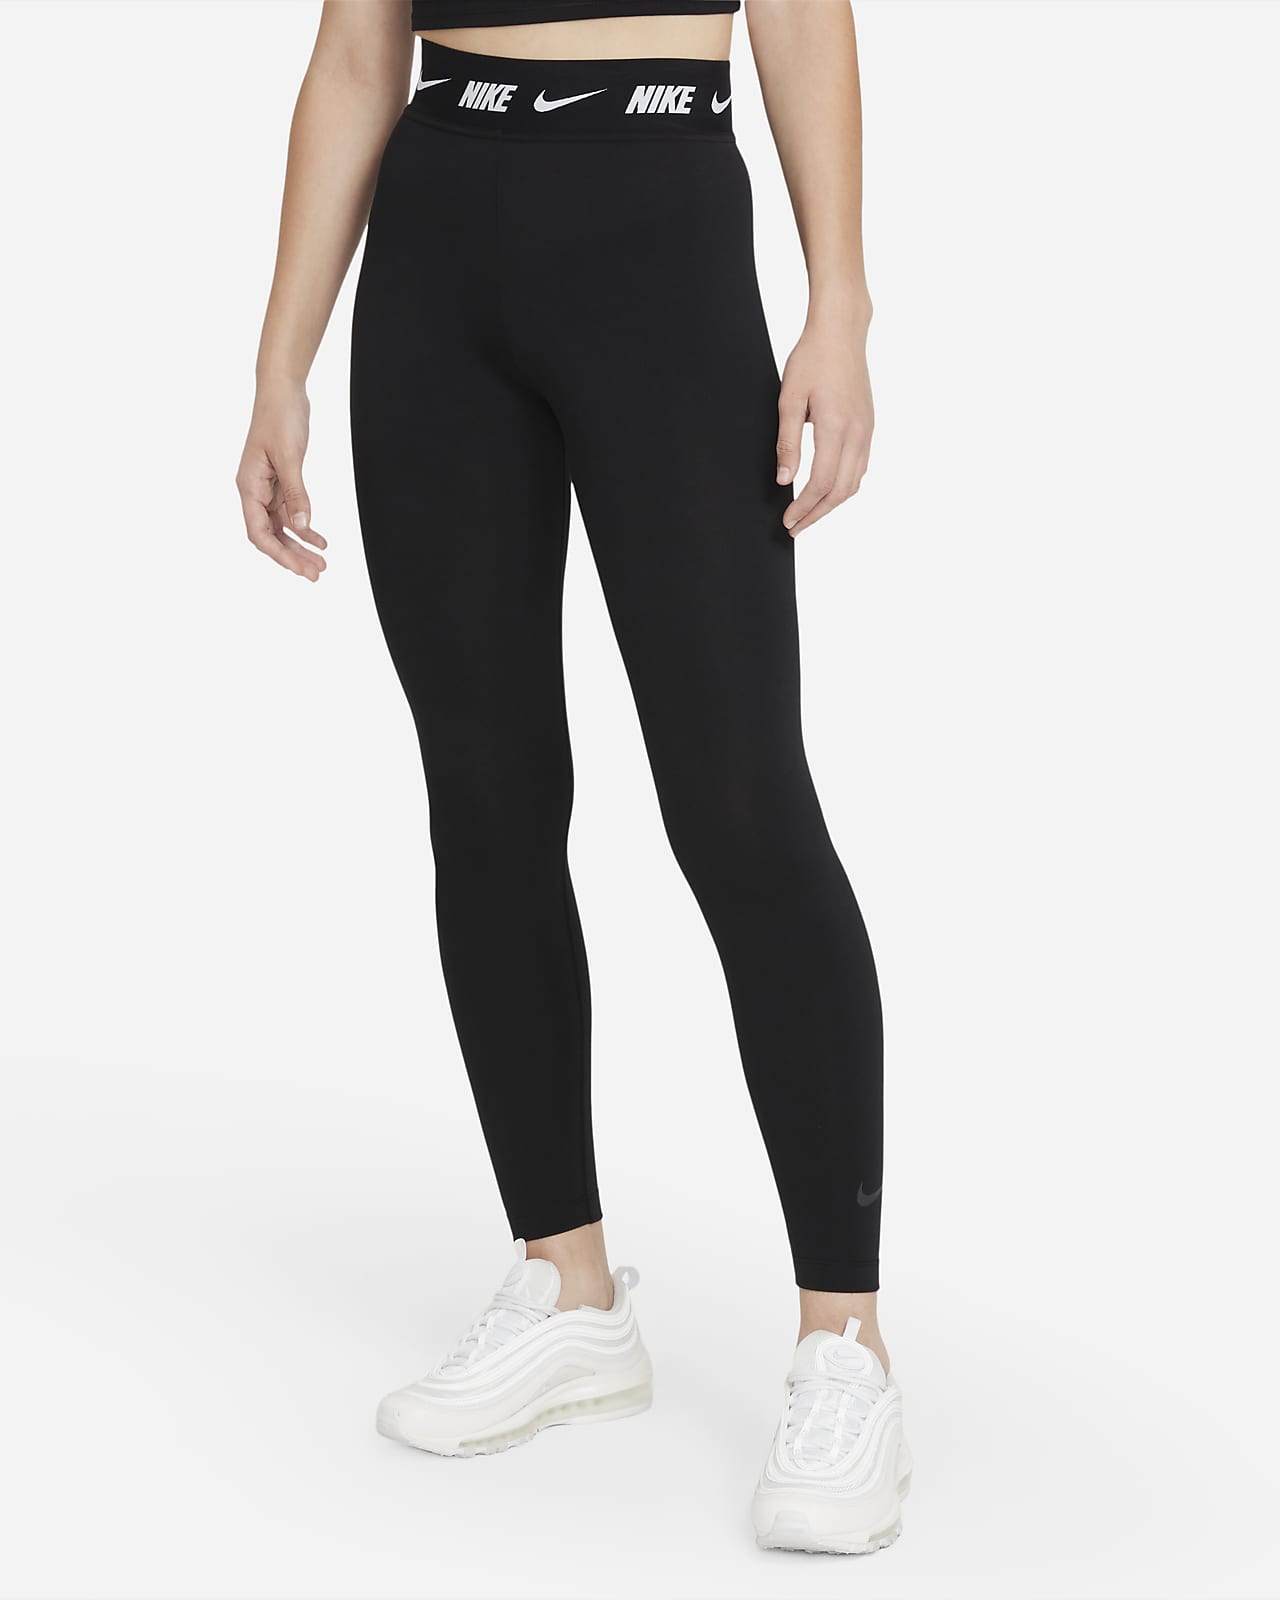 Nike Sportswear Club Damen-Leggings mit hohem Bund